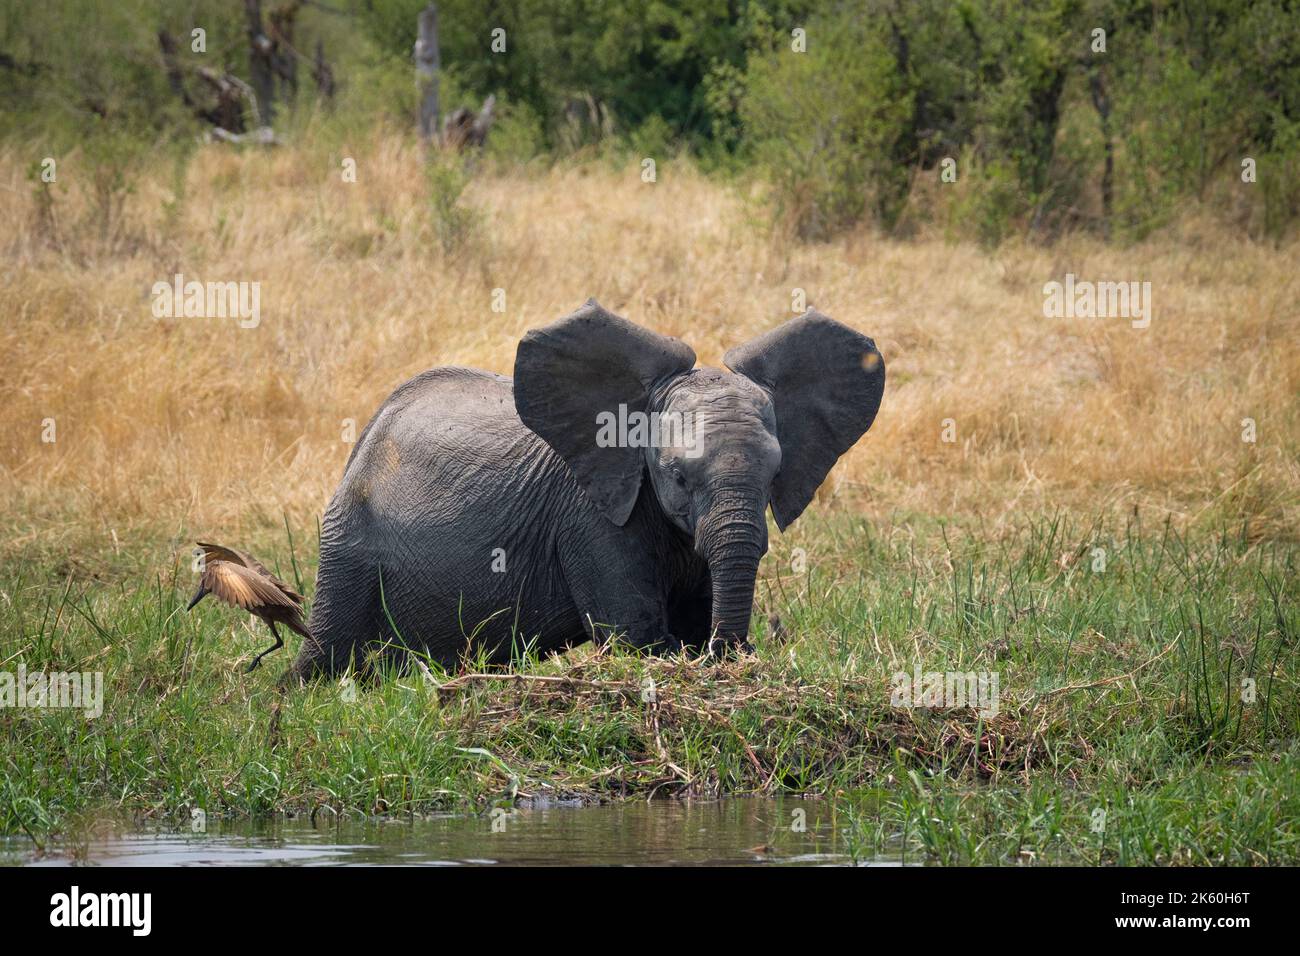 Baby Elefant (Loxodonta africana), das Kalb überquert das Sumpfgebiet mit gespreizten Ohren. Okavango Delta, Botsuana, Afrika Stockfoto